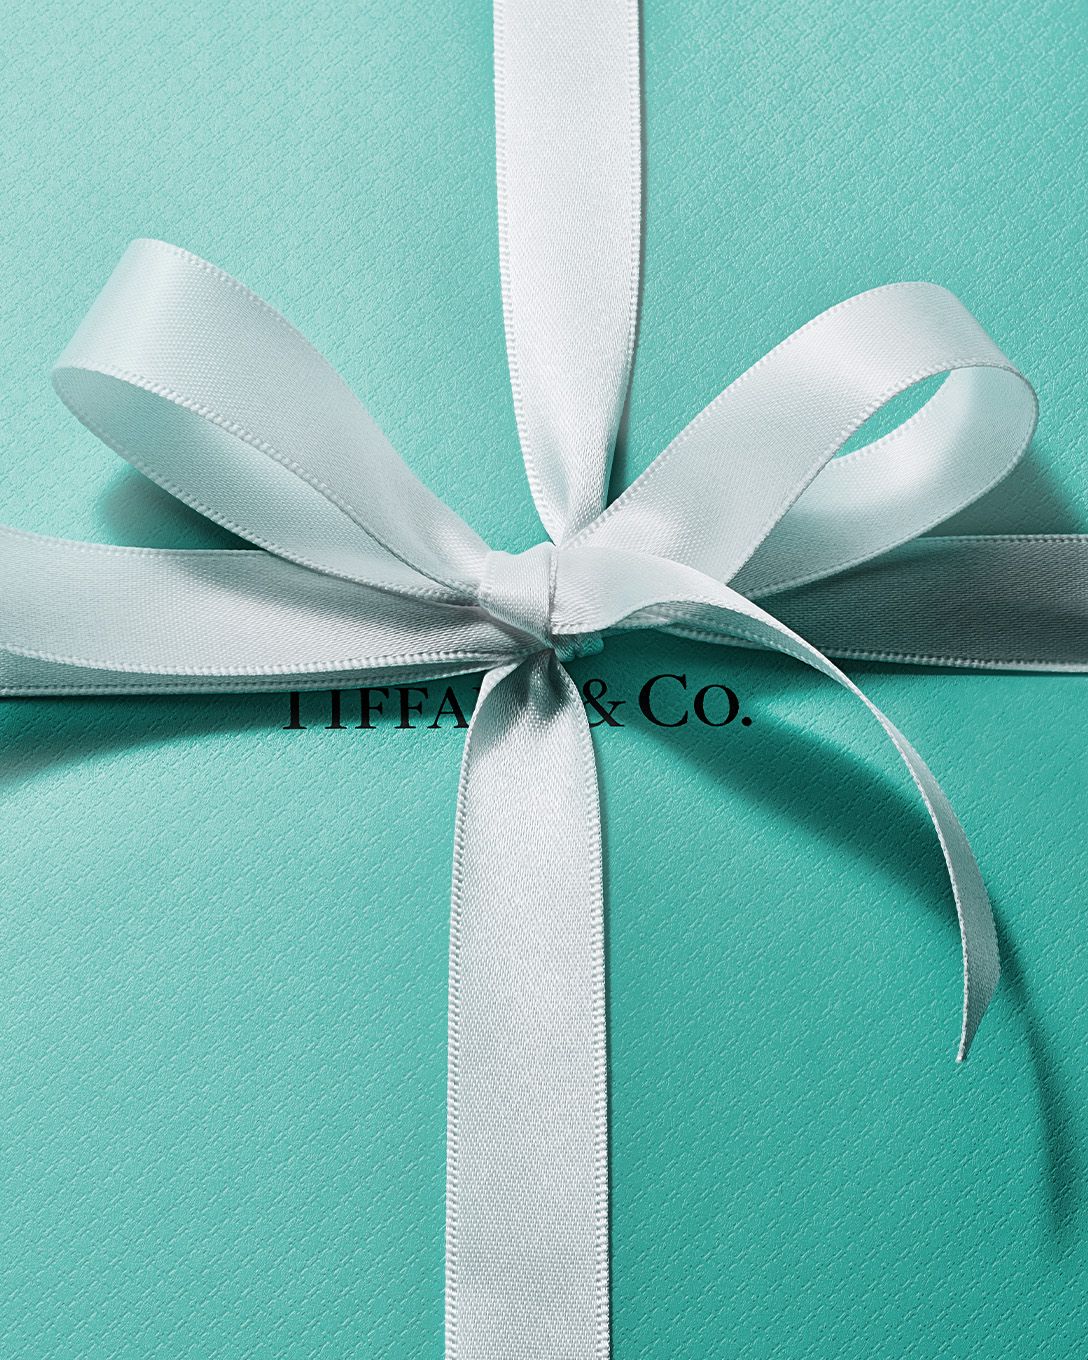 A Brief History of Tiffany & Co. –